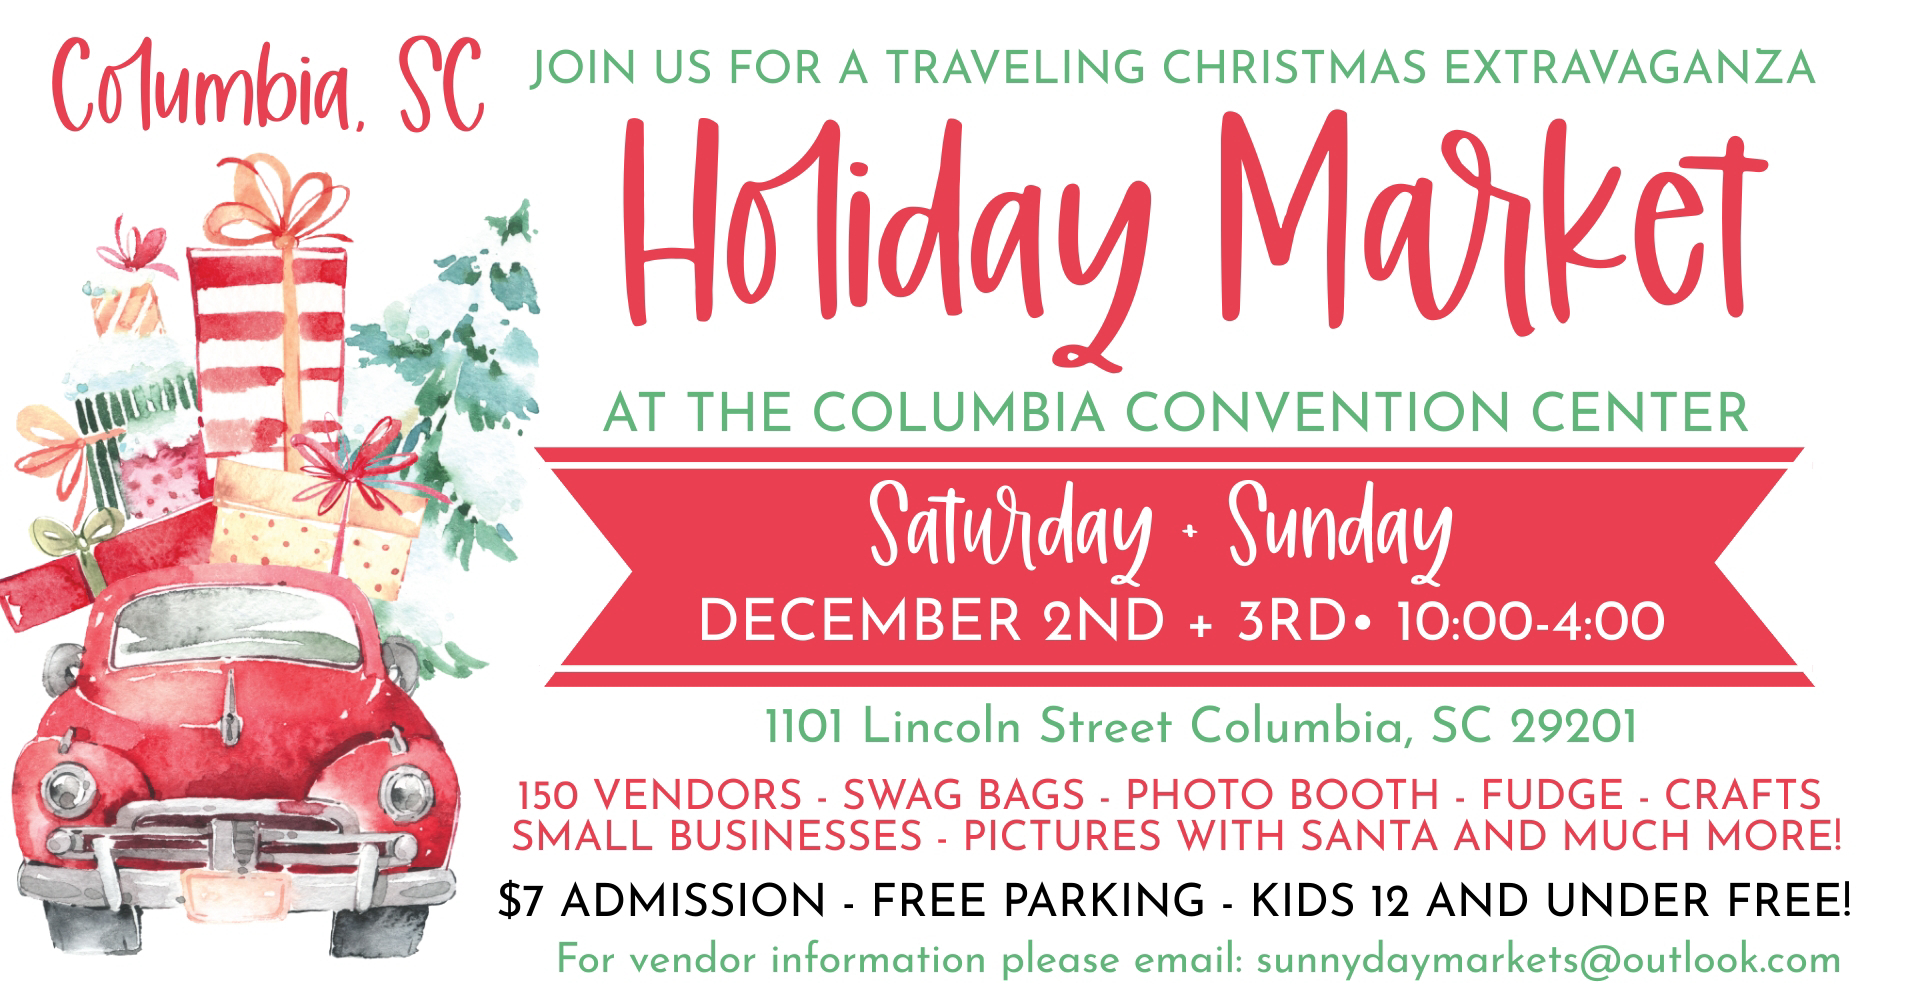 Columbia Christmas Extravaganza Holiday Market cover image